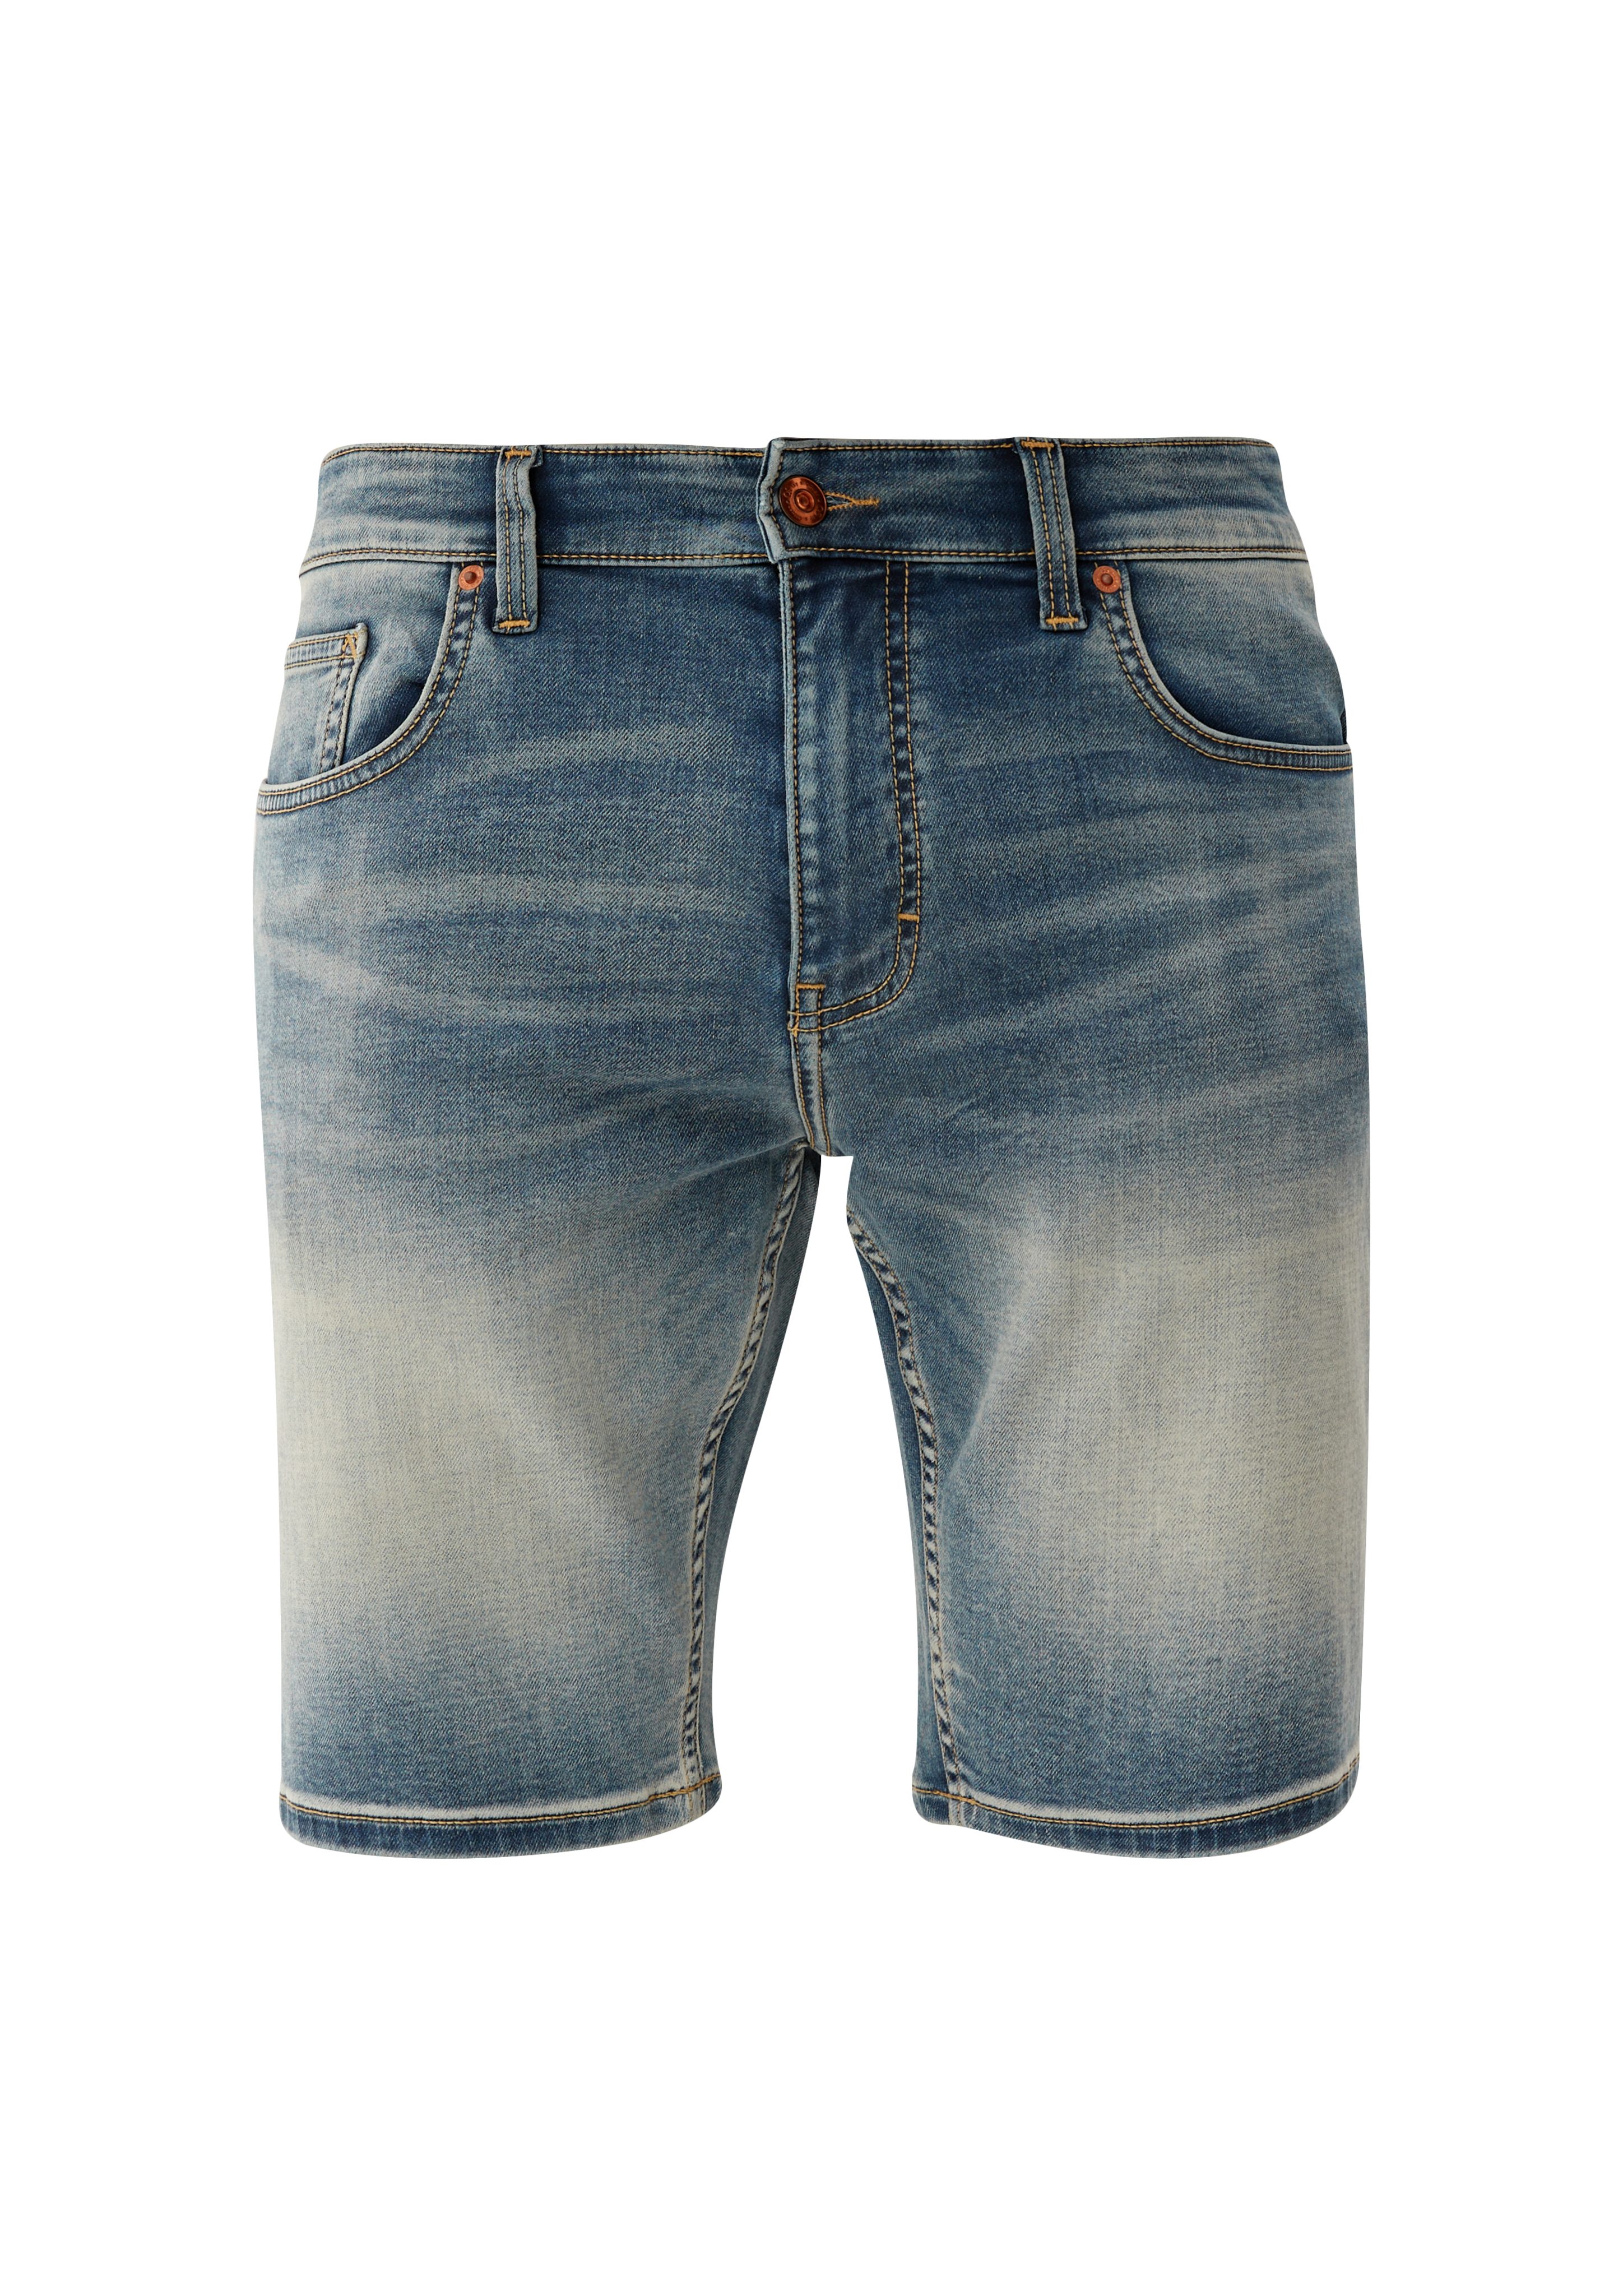 QS Jeansshorts Jeans-Shorts John Straight / hellblau / Fit Mid Waschung Leg / Regular Rise